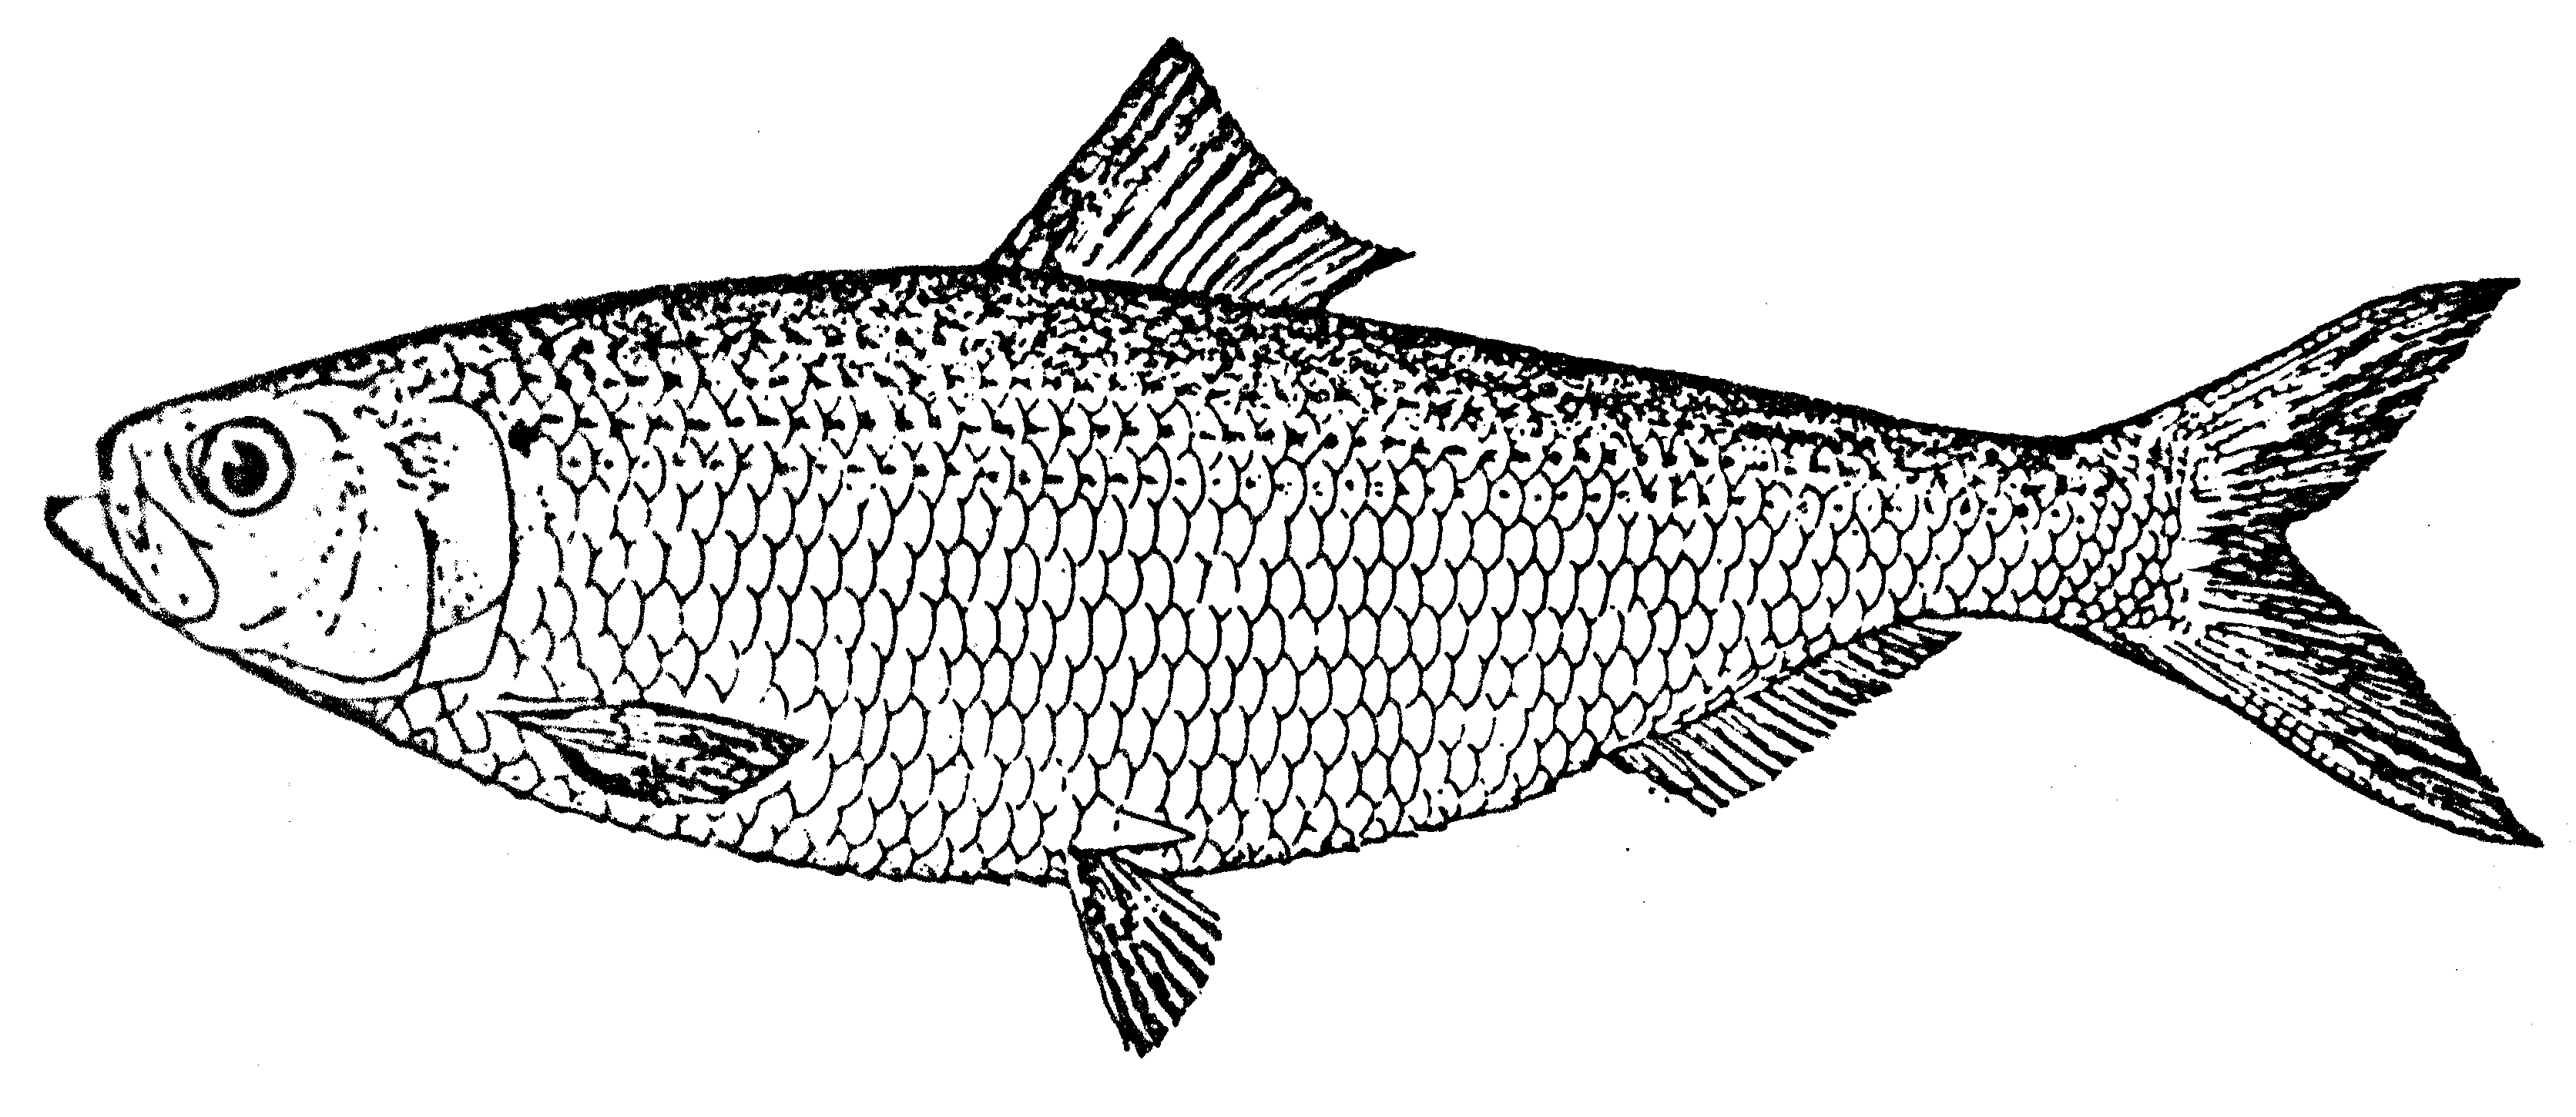 Blueback herring illustration.